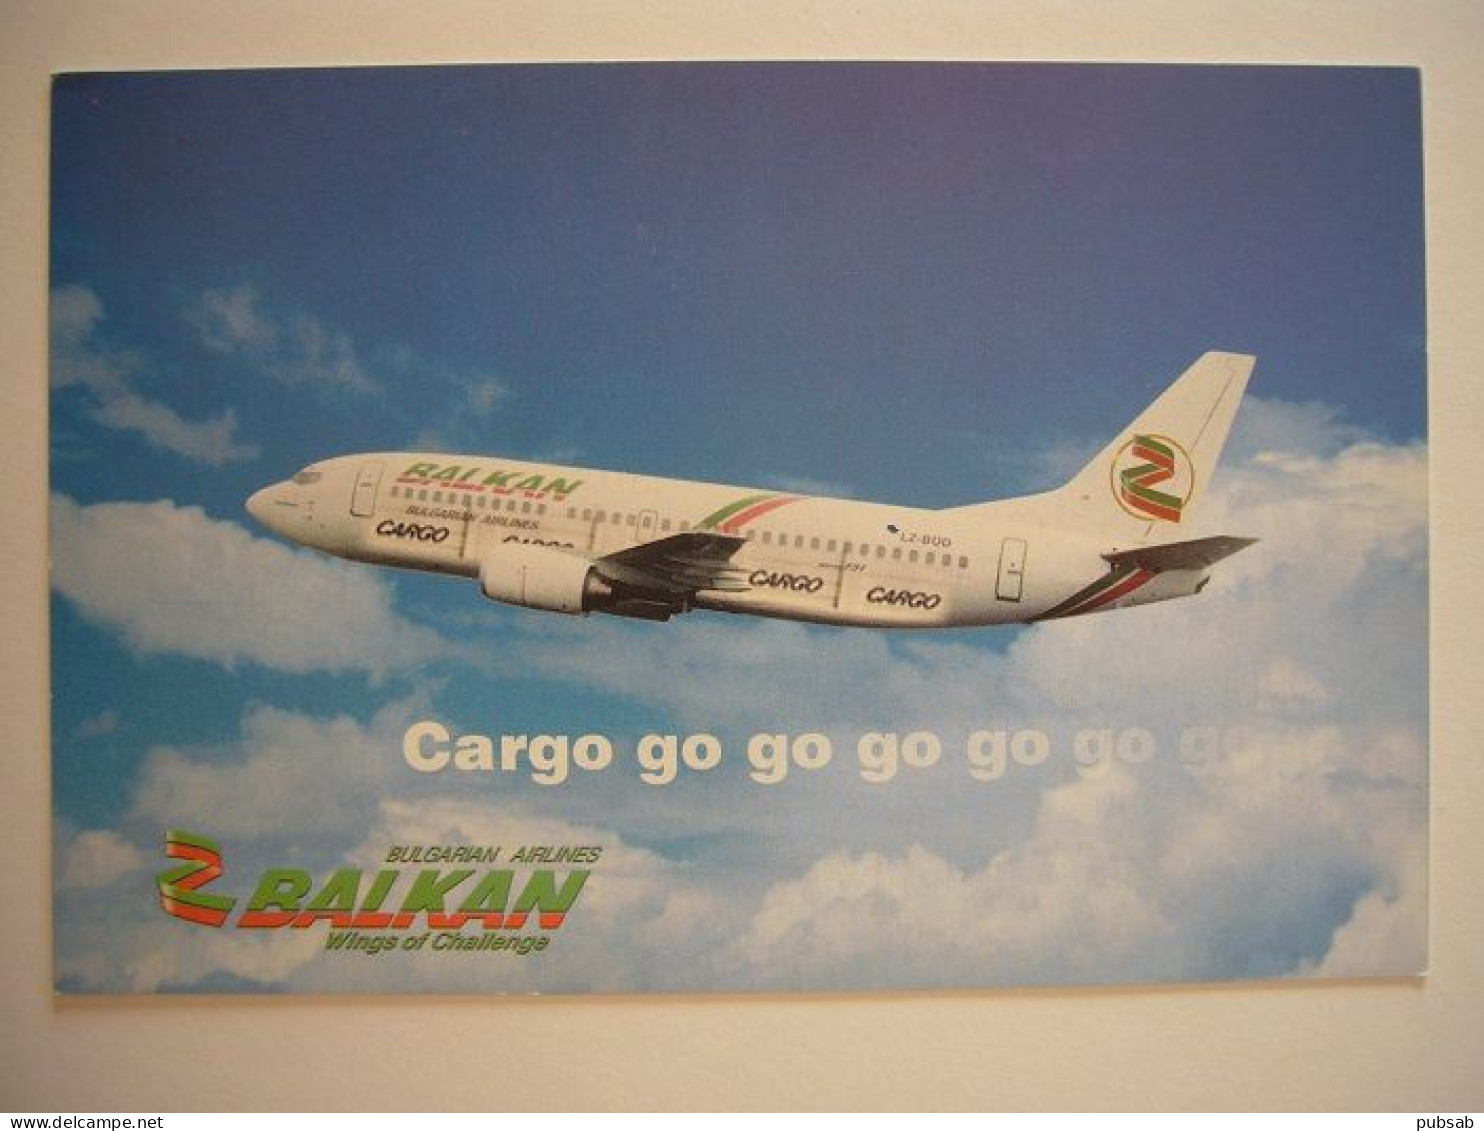 Avion / Airplane / BALKAN - BULGARIAN AIRLINES / Boeing B 737-300 / Airline Issue - 1946-....: Era Moderna